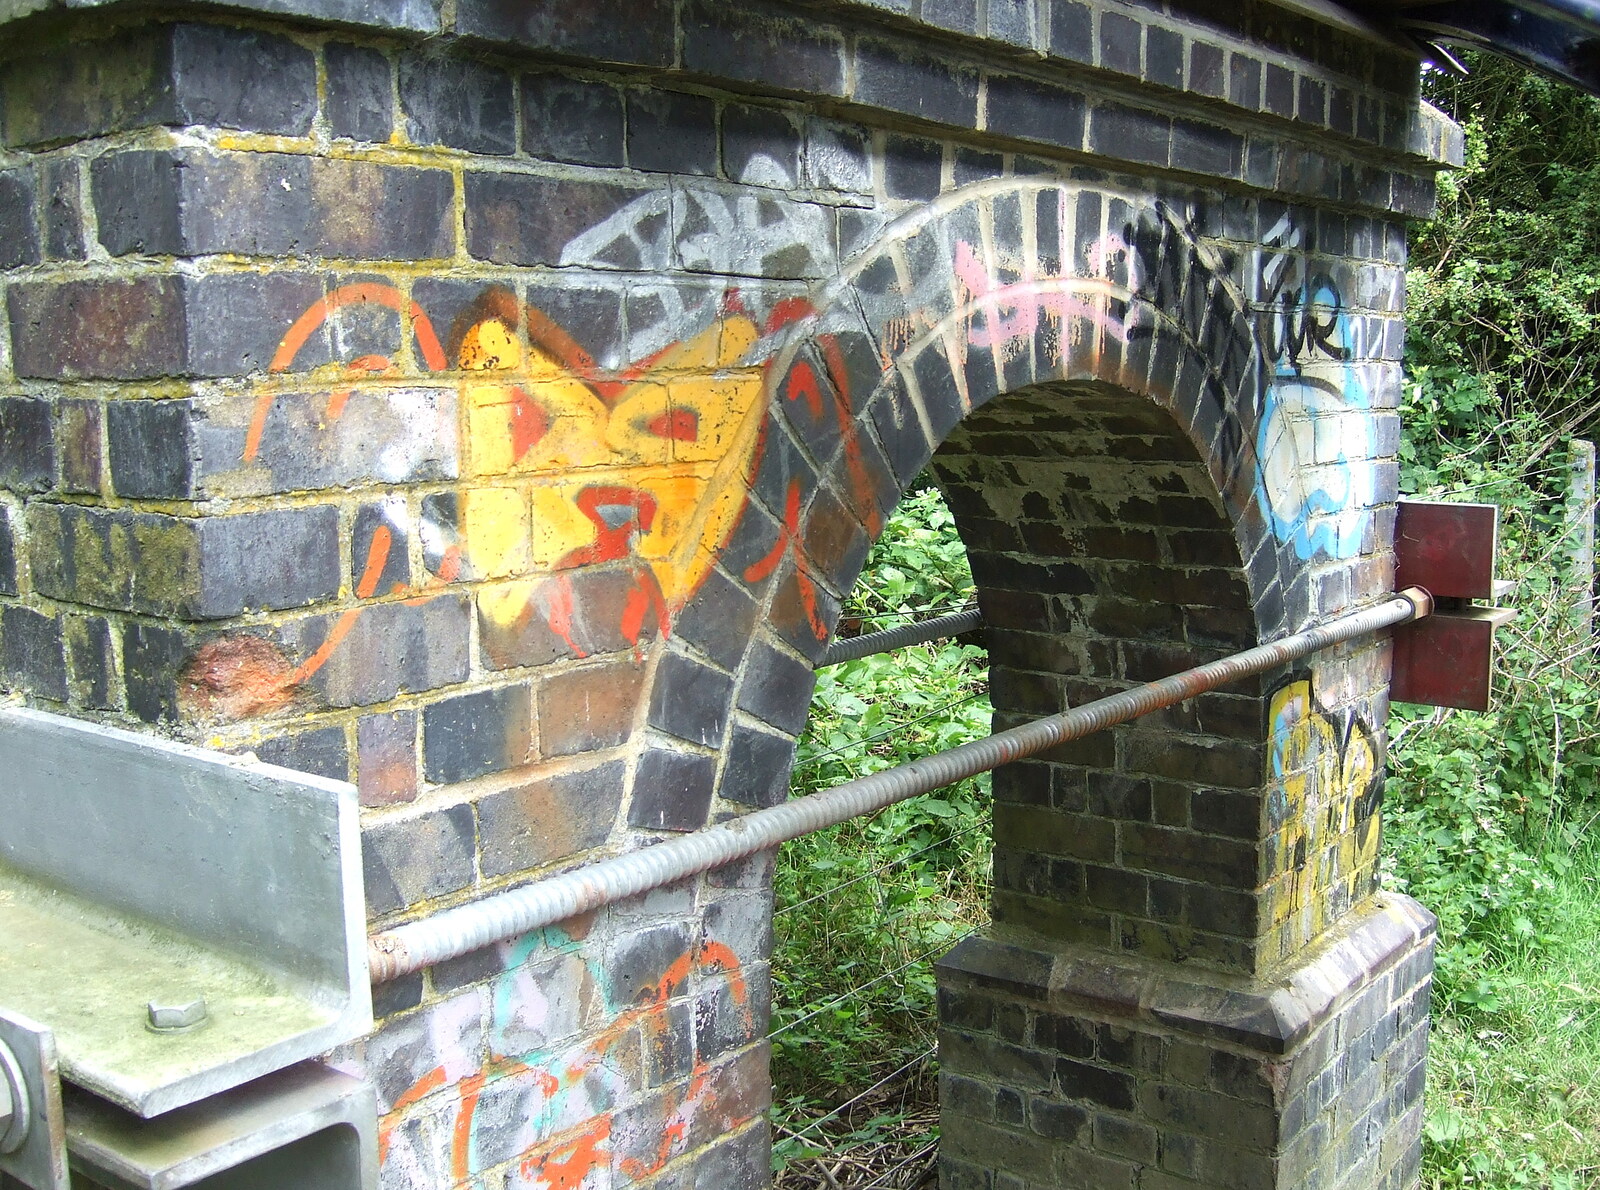 Graffiti on a bridge from The Cambridge Folk Festival, Cherry Hinton, Cambridge - 28th July 2012